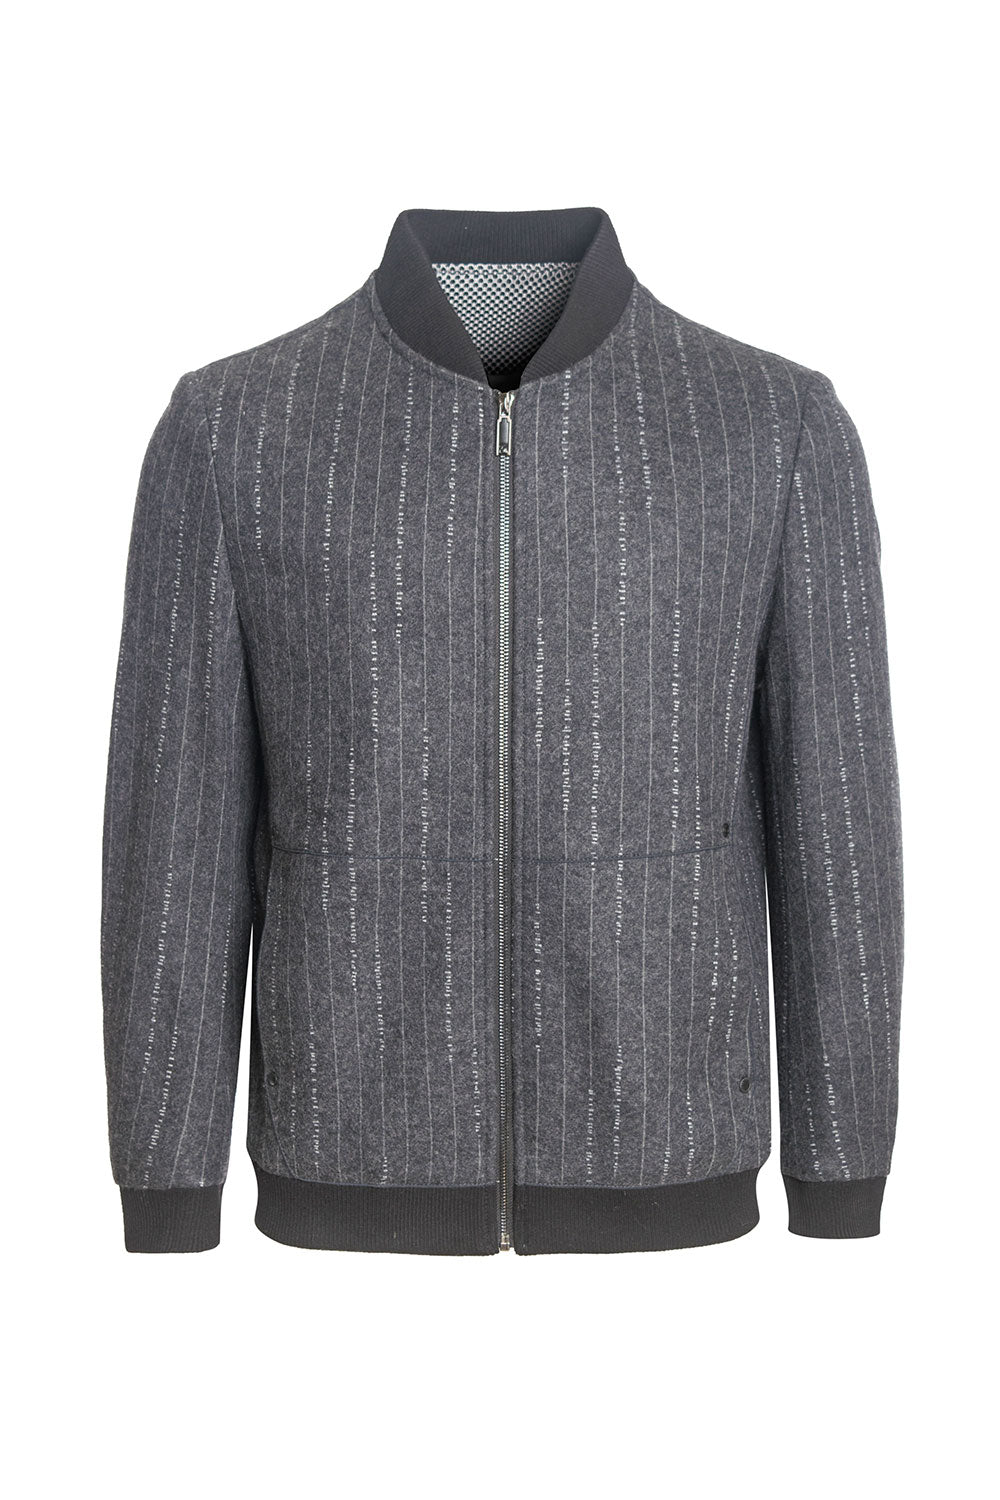 Barabas Men Coat Black grey knit collar striped liner jacket BH60